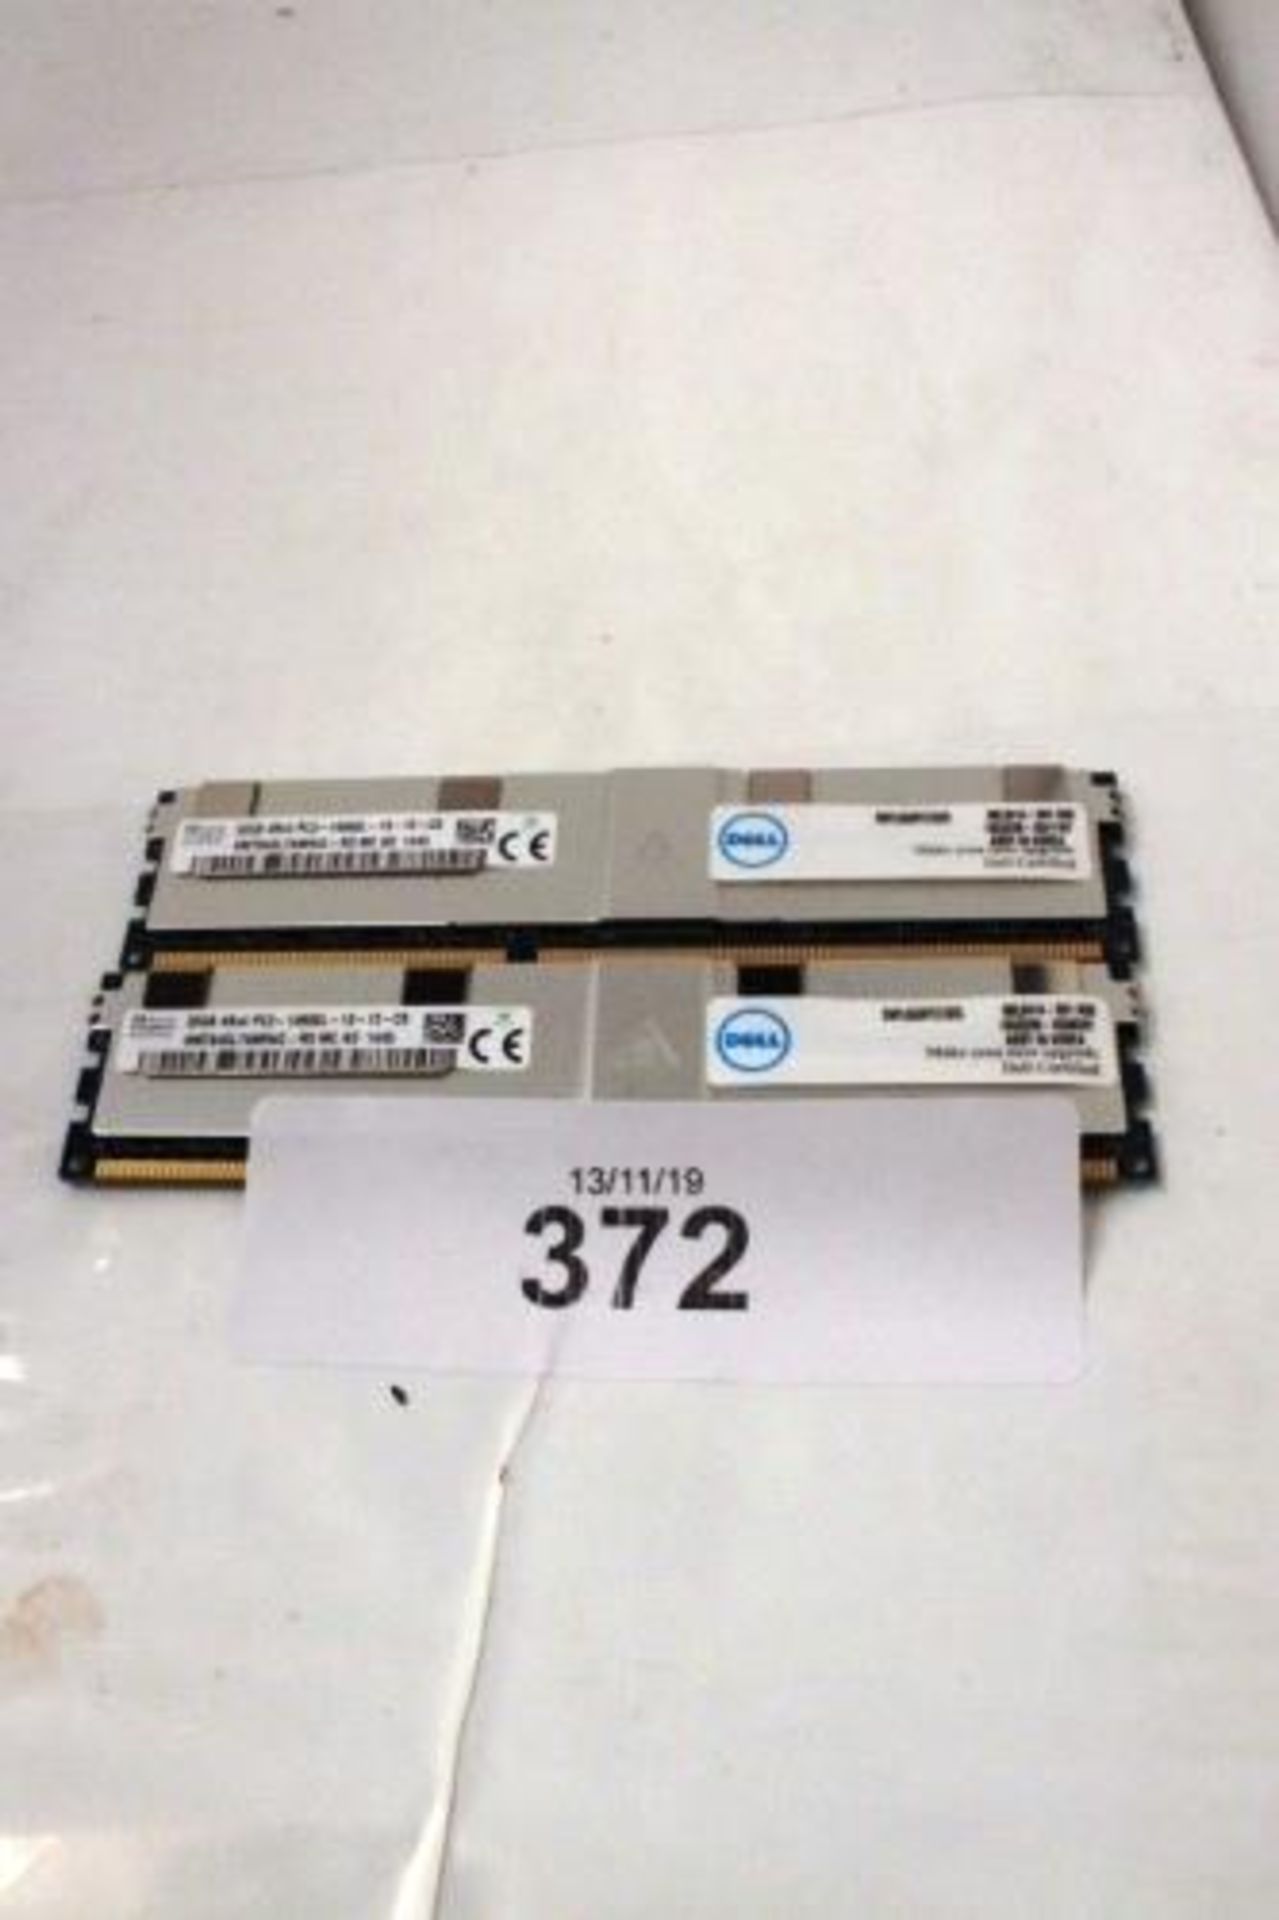 2 x SK Hynix DDR3 32gb 14900L FB memory cards, Ref: HMT84GL7AMR4C-RD MC AD, Dell certified - New (